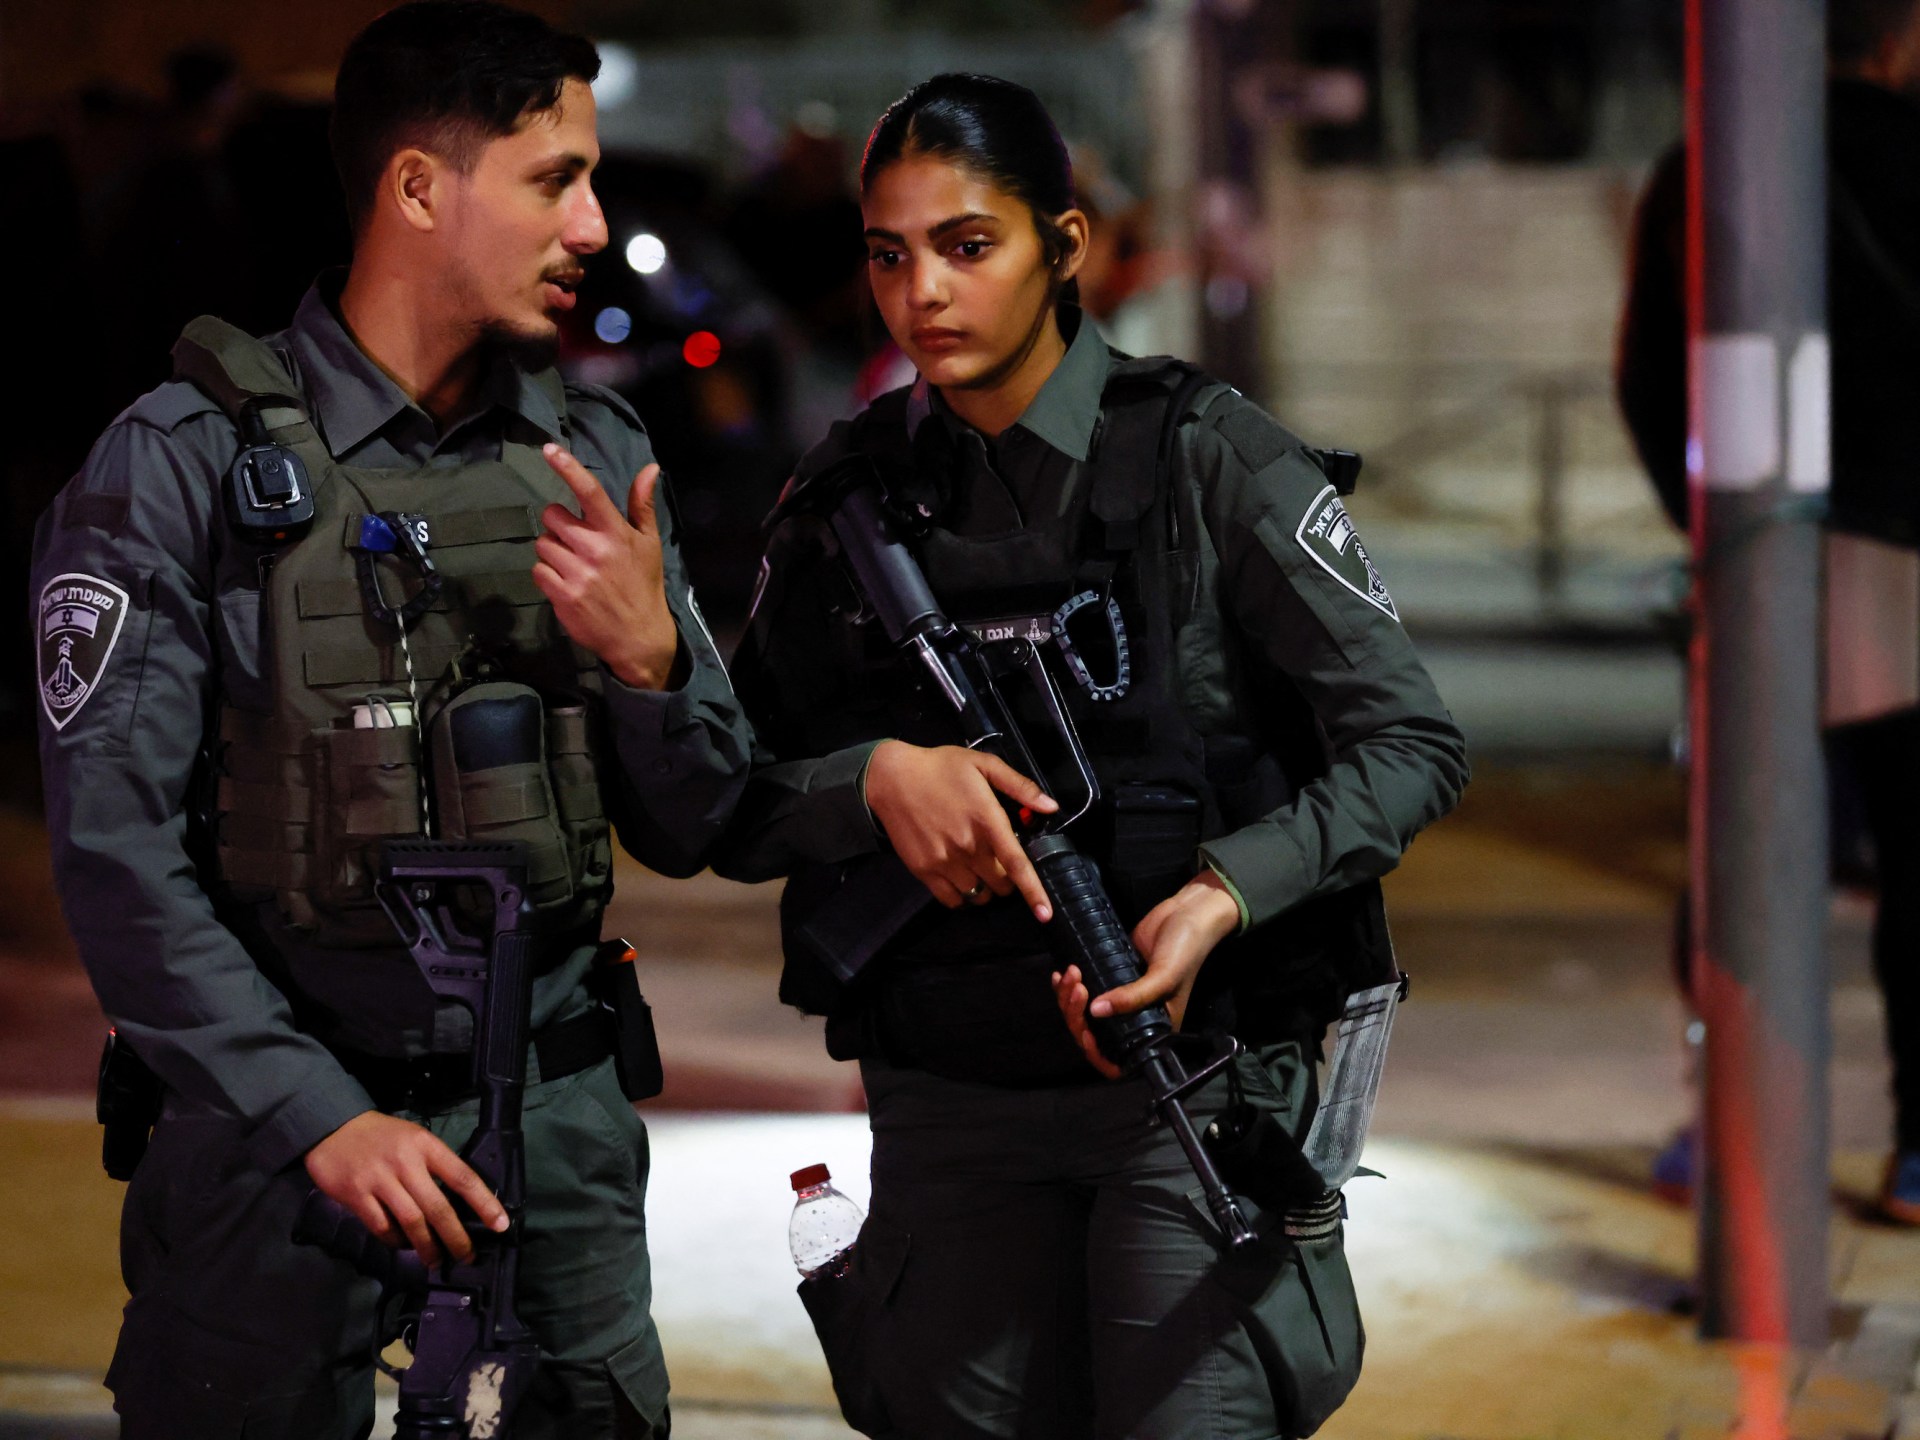 Two Israelis injured in occupied East Jerusalem capturing